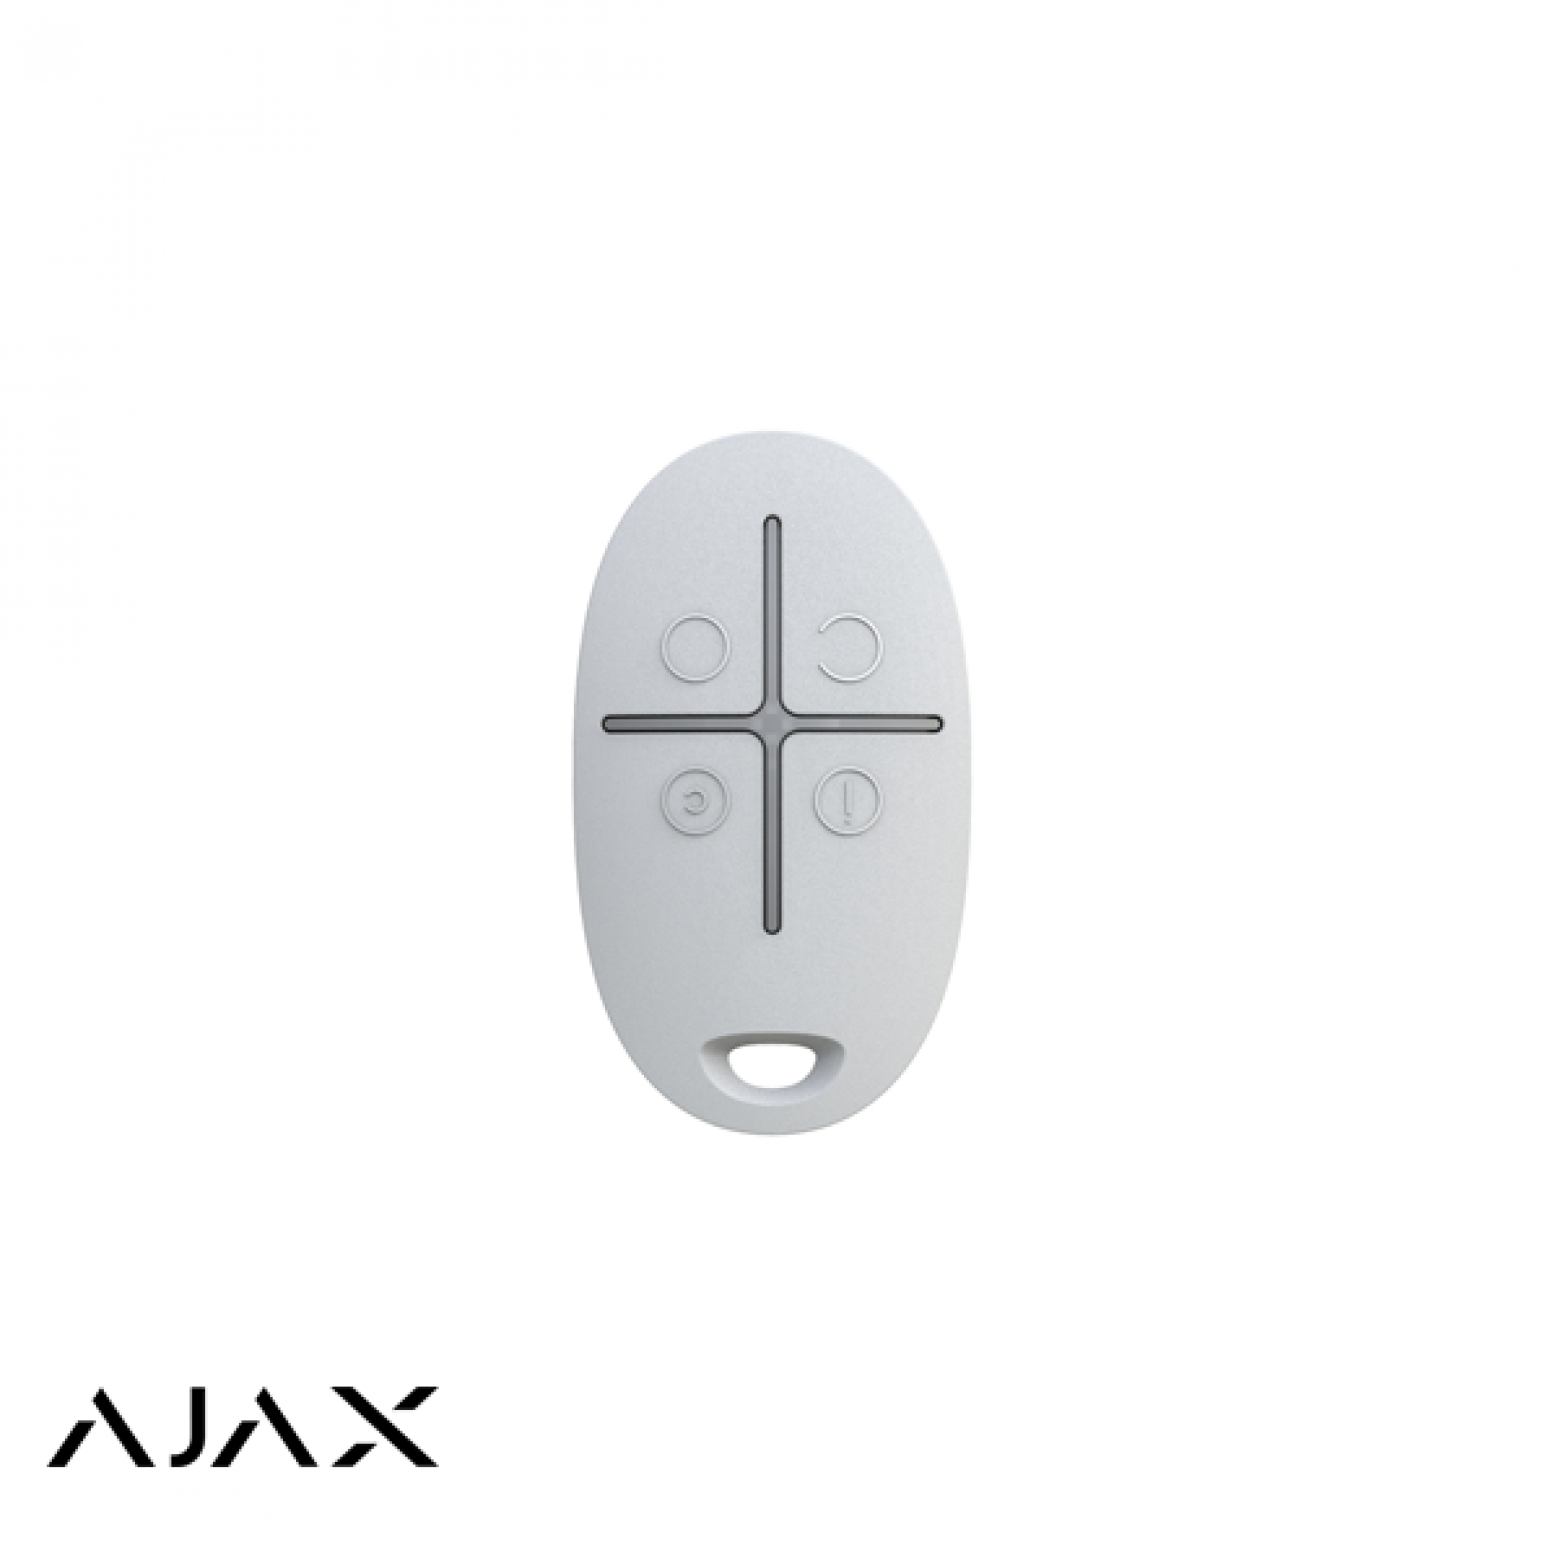 AJAX SpaceControl wireless remote control